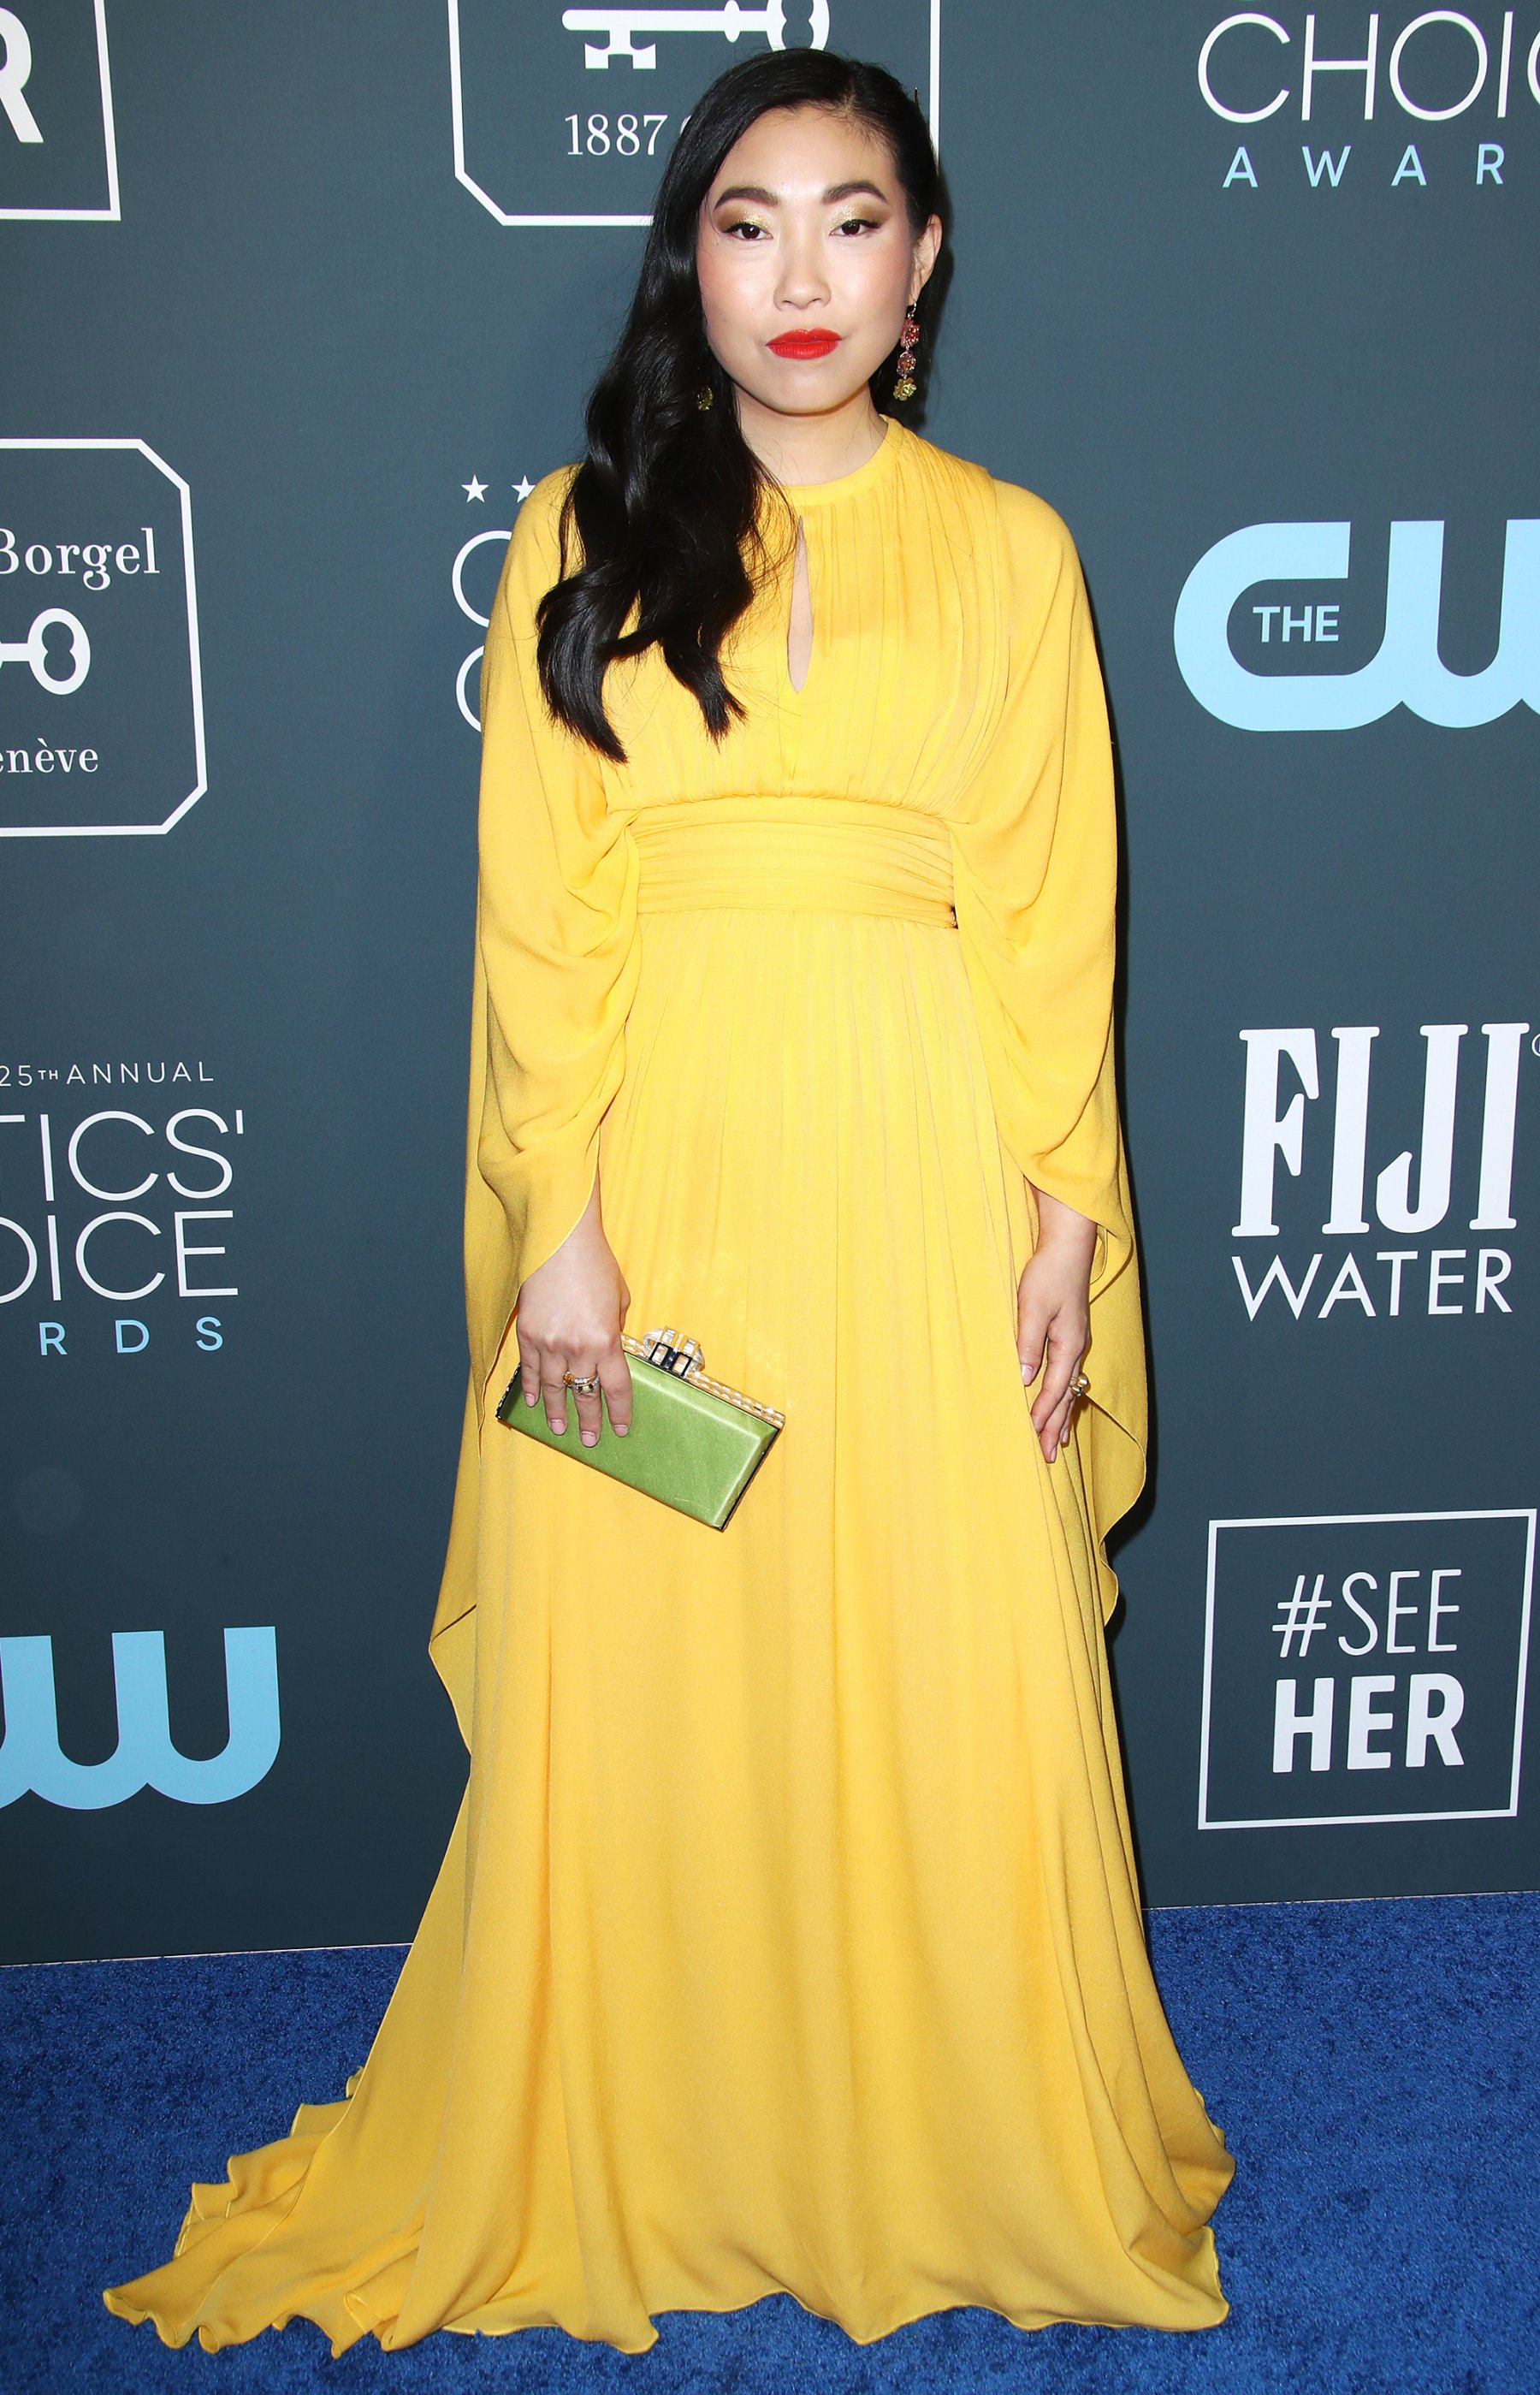 Critics' Choice Awards 2020 Red Carpet Fashion: Celebs in Dresses | Us ...